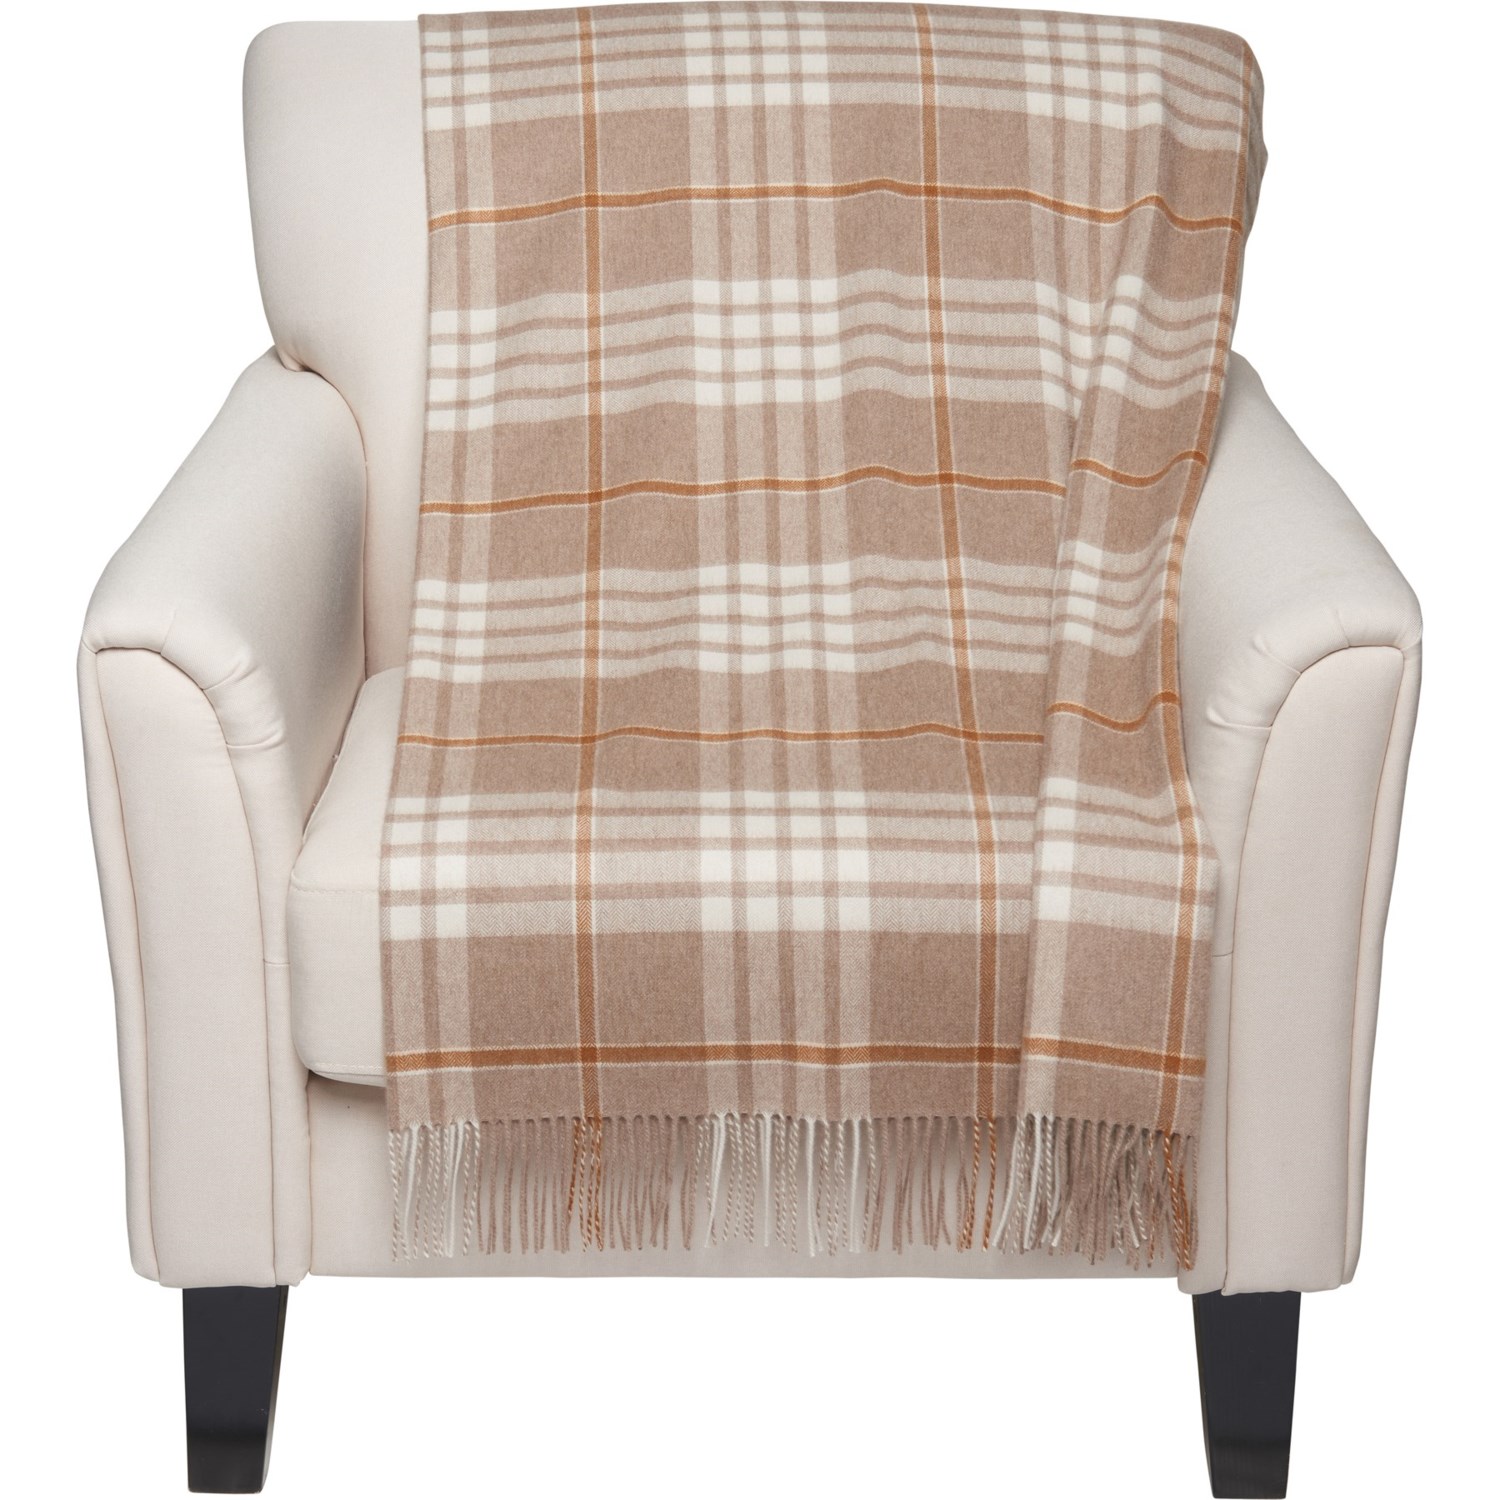 Royal Speyside 100% Cashmere Tartan Plaid Throw Blanket - 50x70”